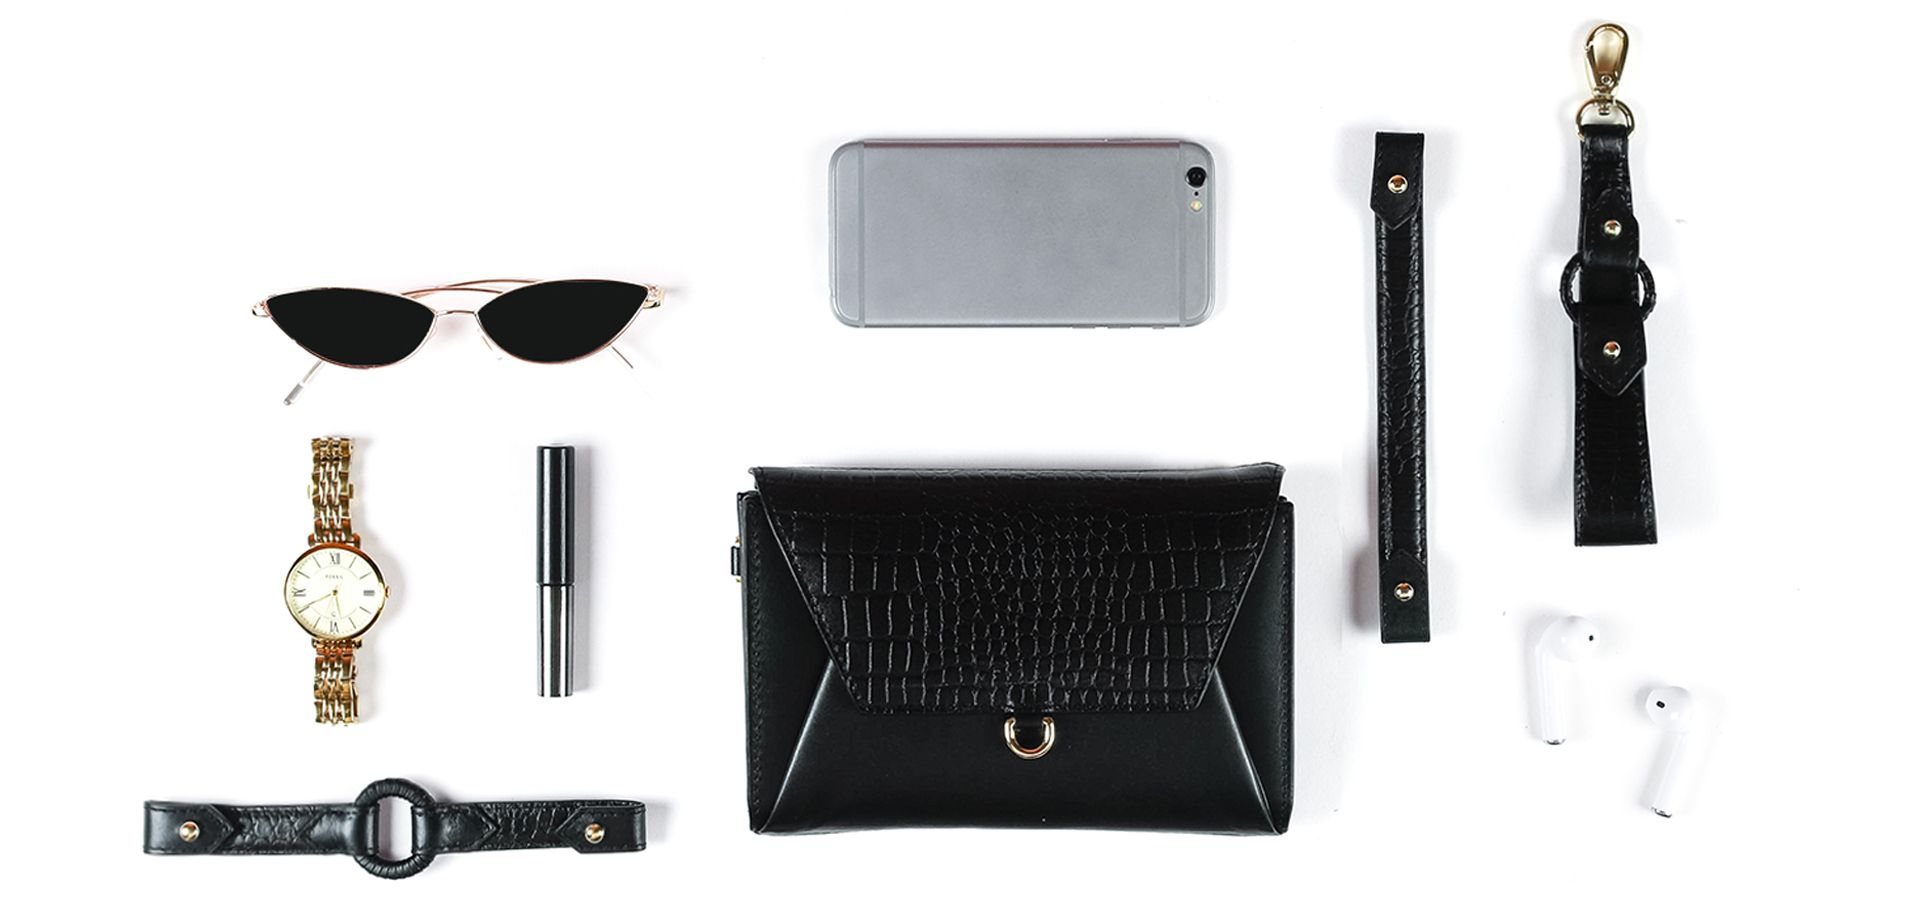 Ember Sleek Wallet, Clutch & Wristlet with Ember Bracelets in Premium Black Leather fits cards, cash & phone.